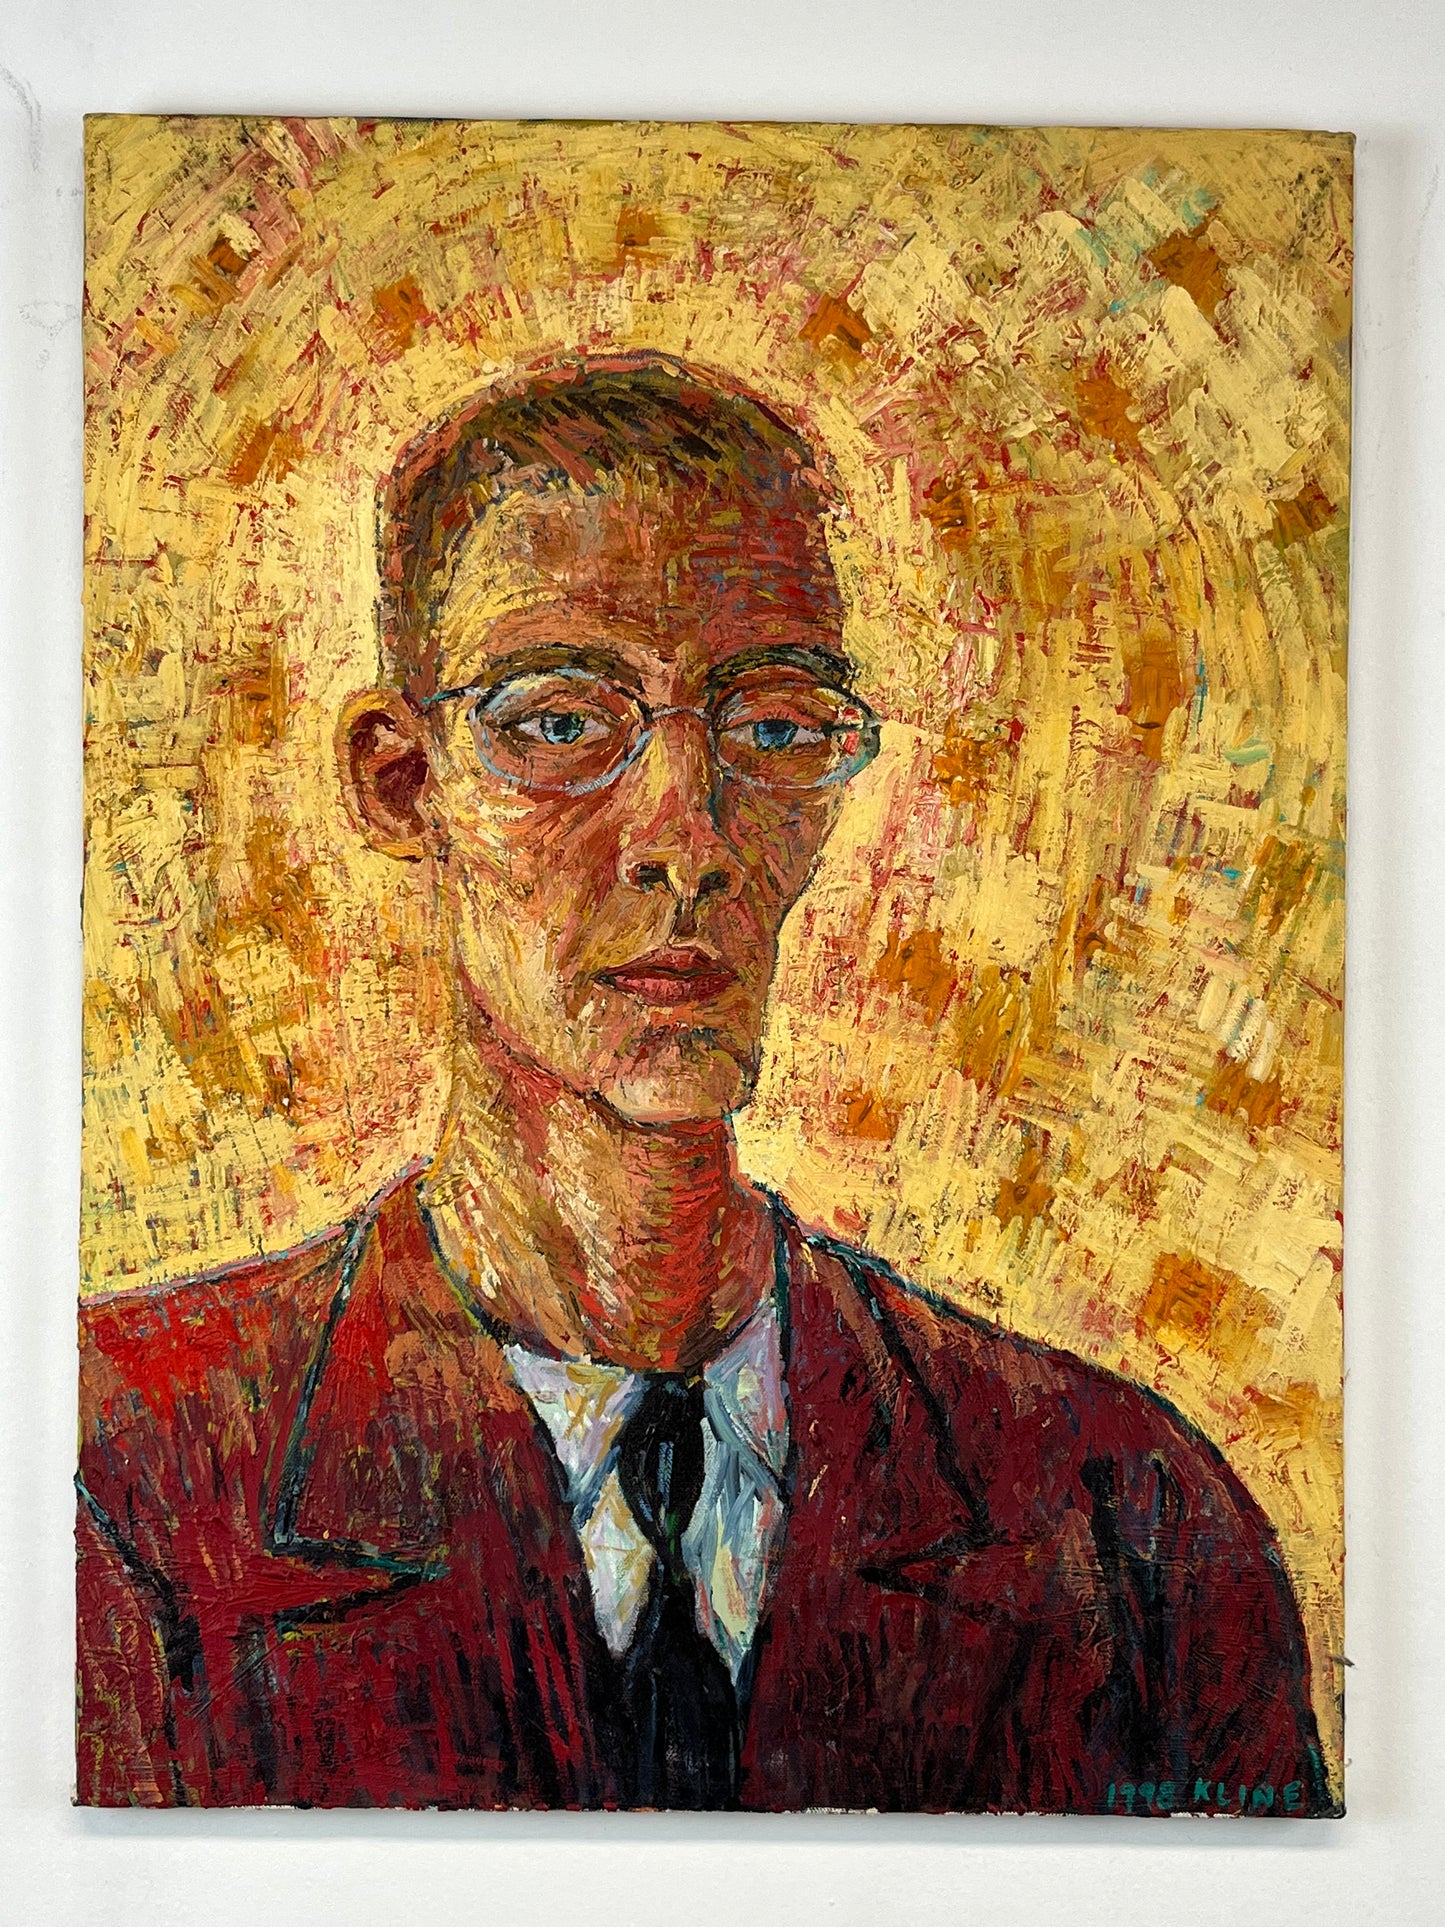 Self-Portrait, 1998. Oil on Canvas. 18" x 24". John Kline Artwork. Yellow Red van Gogh style